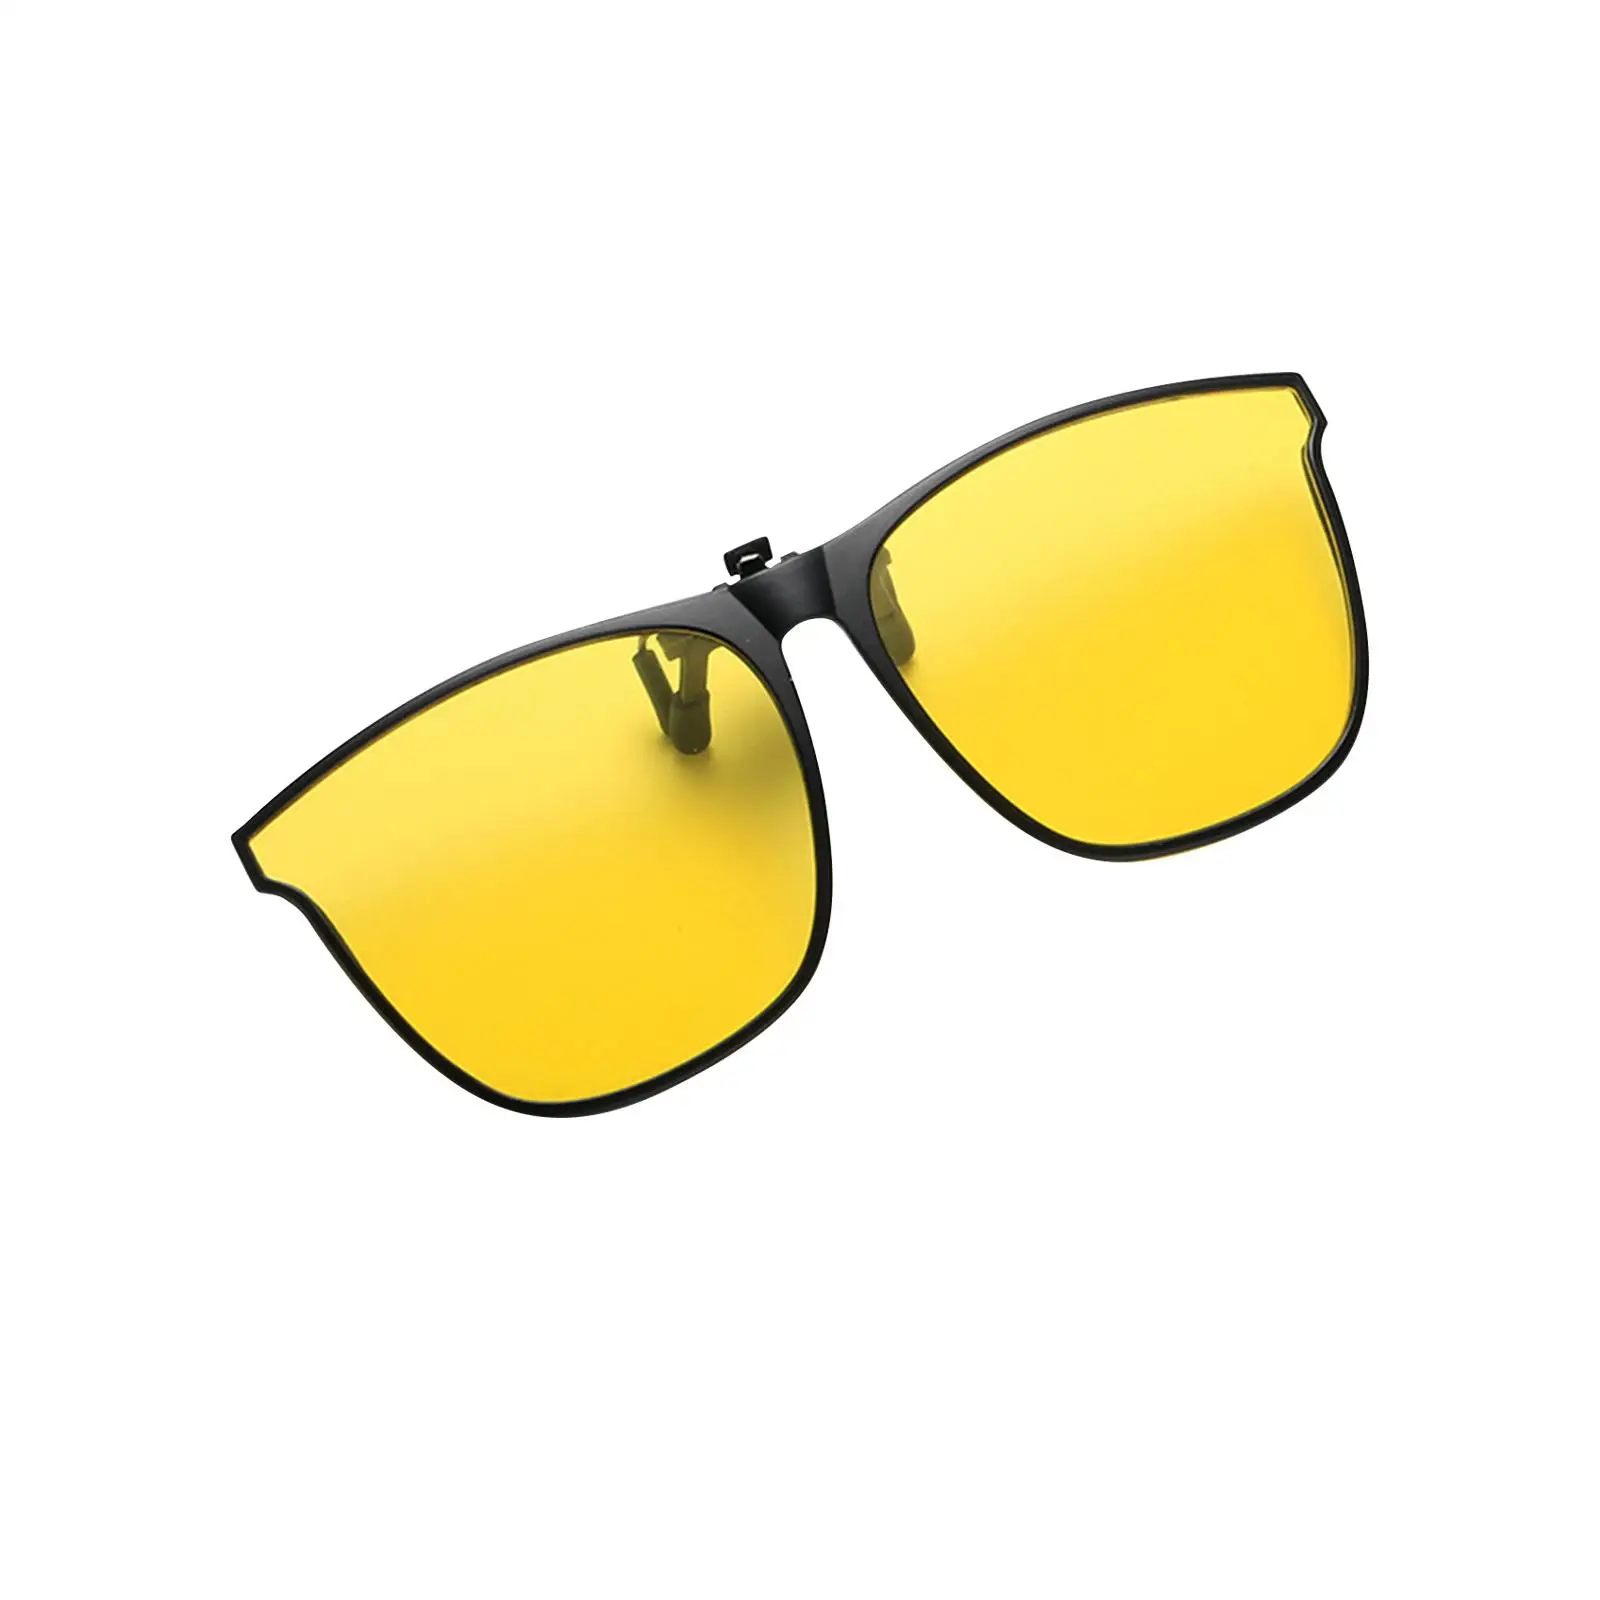 Polarized Clip On Sunglasses Lens Lightweight Eyeglasses Driving Glasses Large Frame Anti Glare for Outdoor Travelling Driving